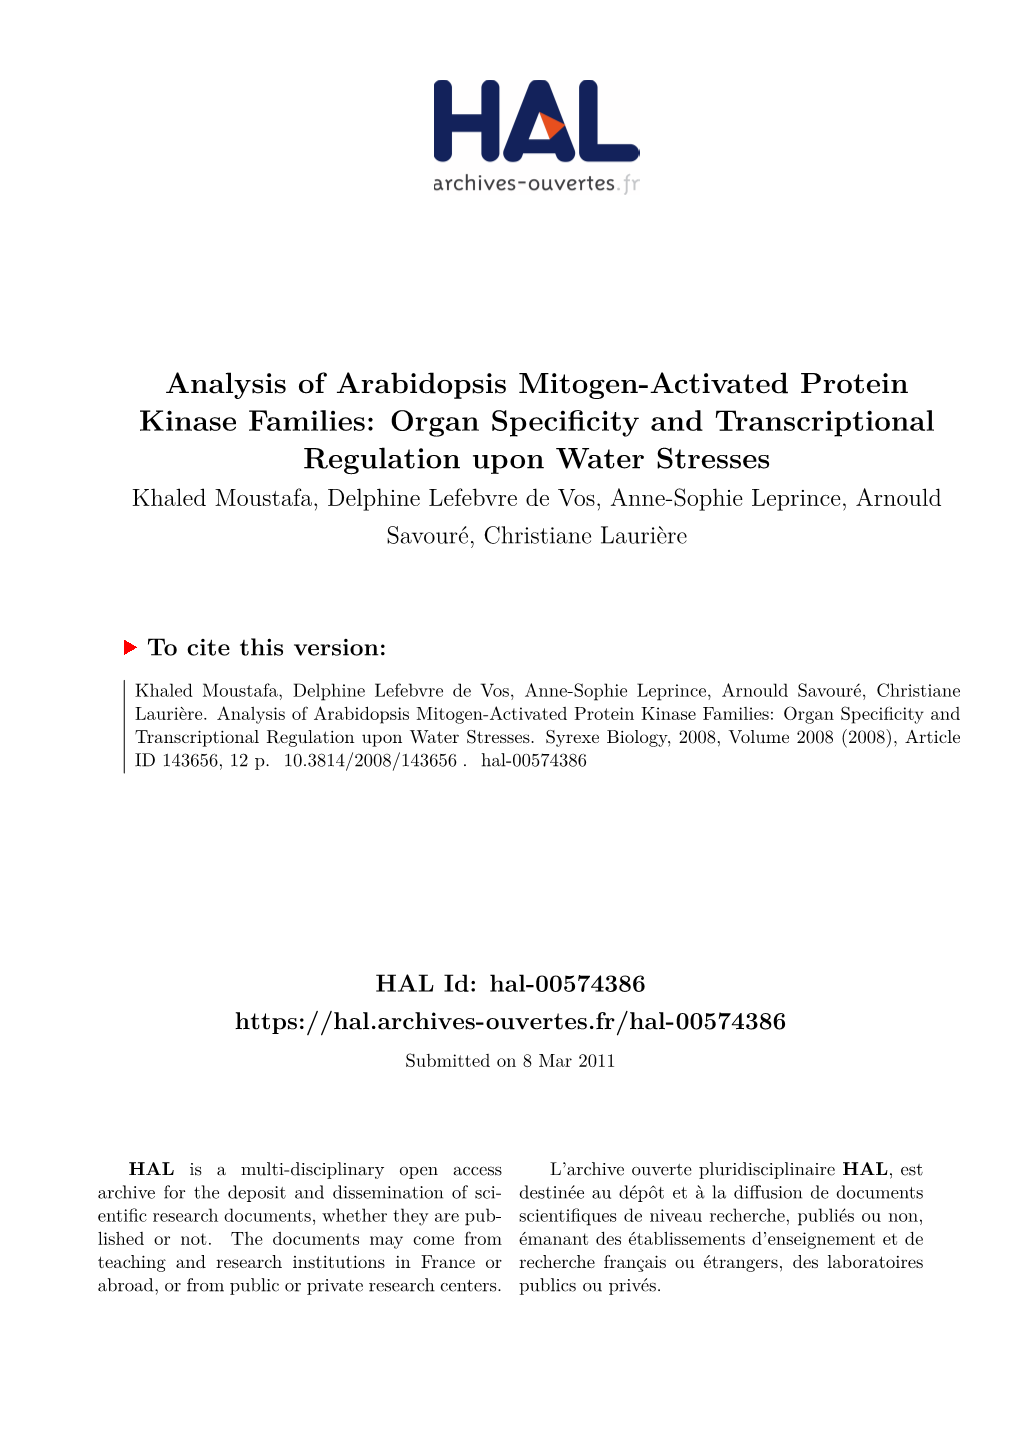 Analysis of Arabidopsis Mitogen-Activated Protein Kinase